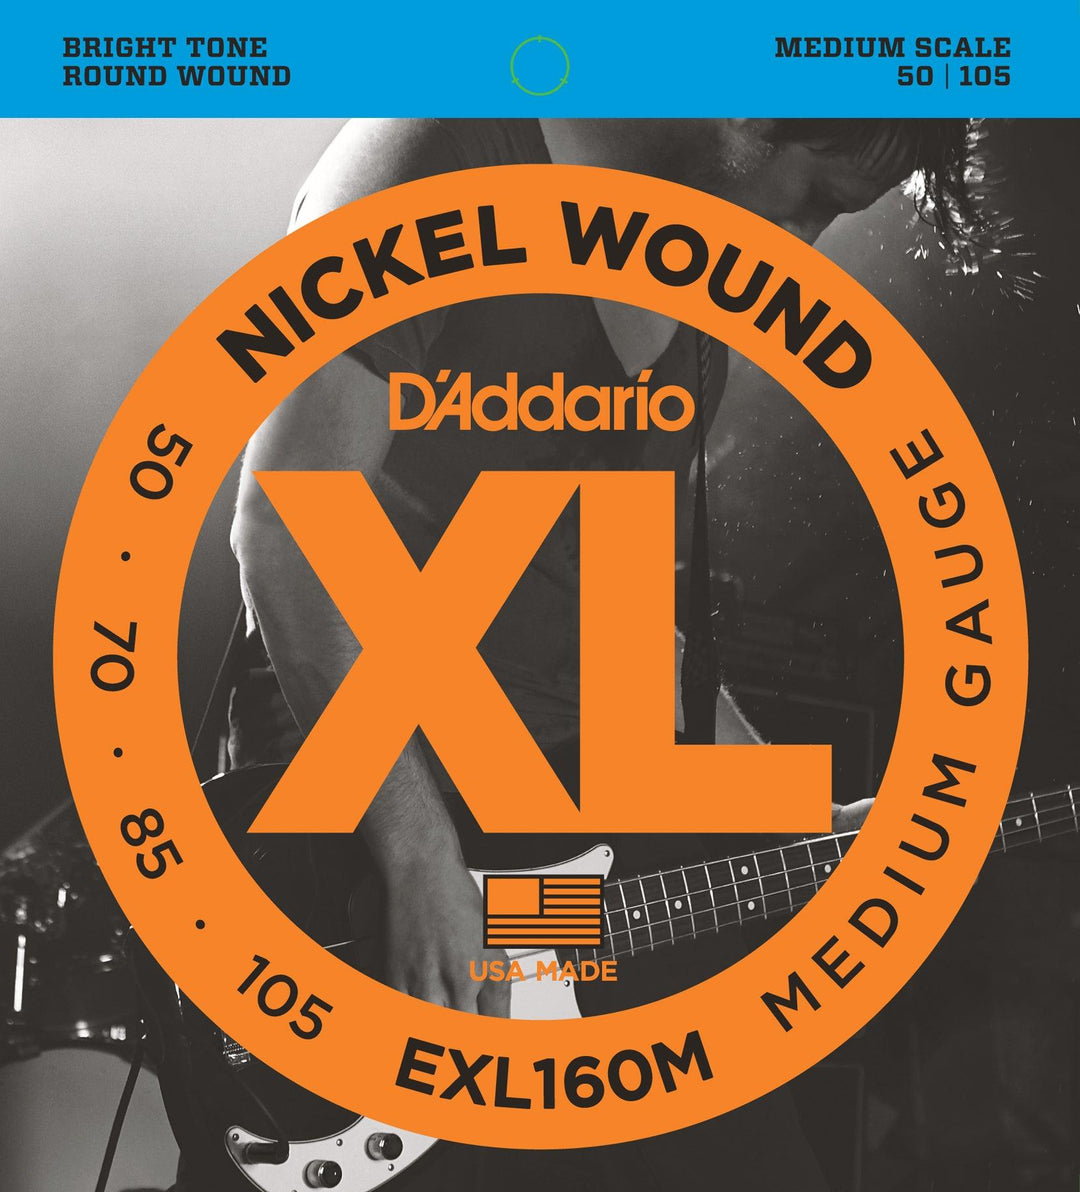 D'Addario XL Bass Guitar String Set, Nickel, EXL160M Medium .050-.105, Medium Scale - A Strings